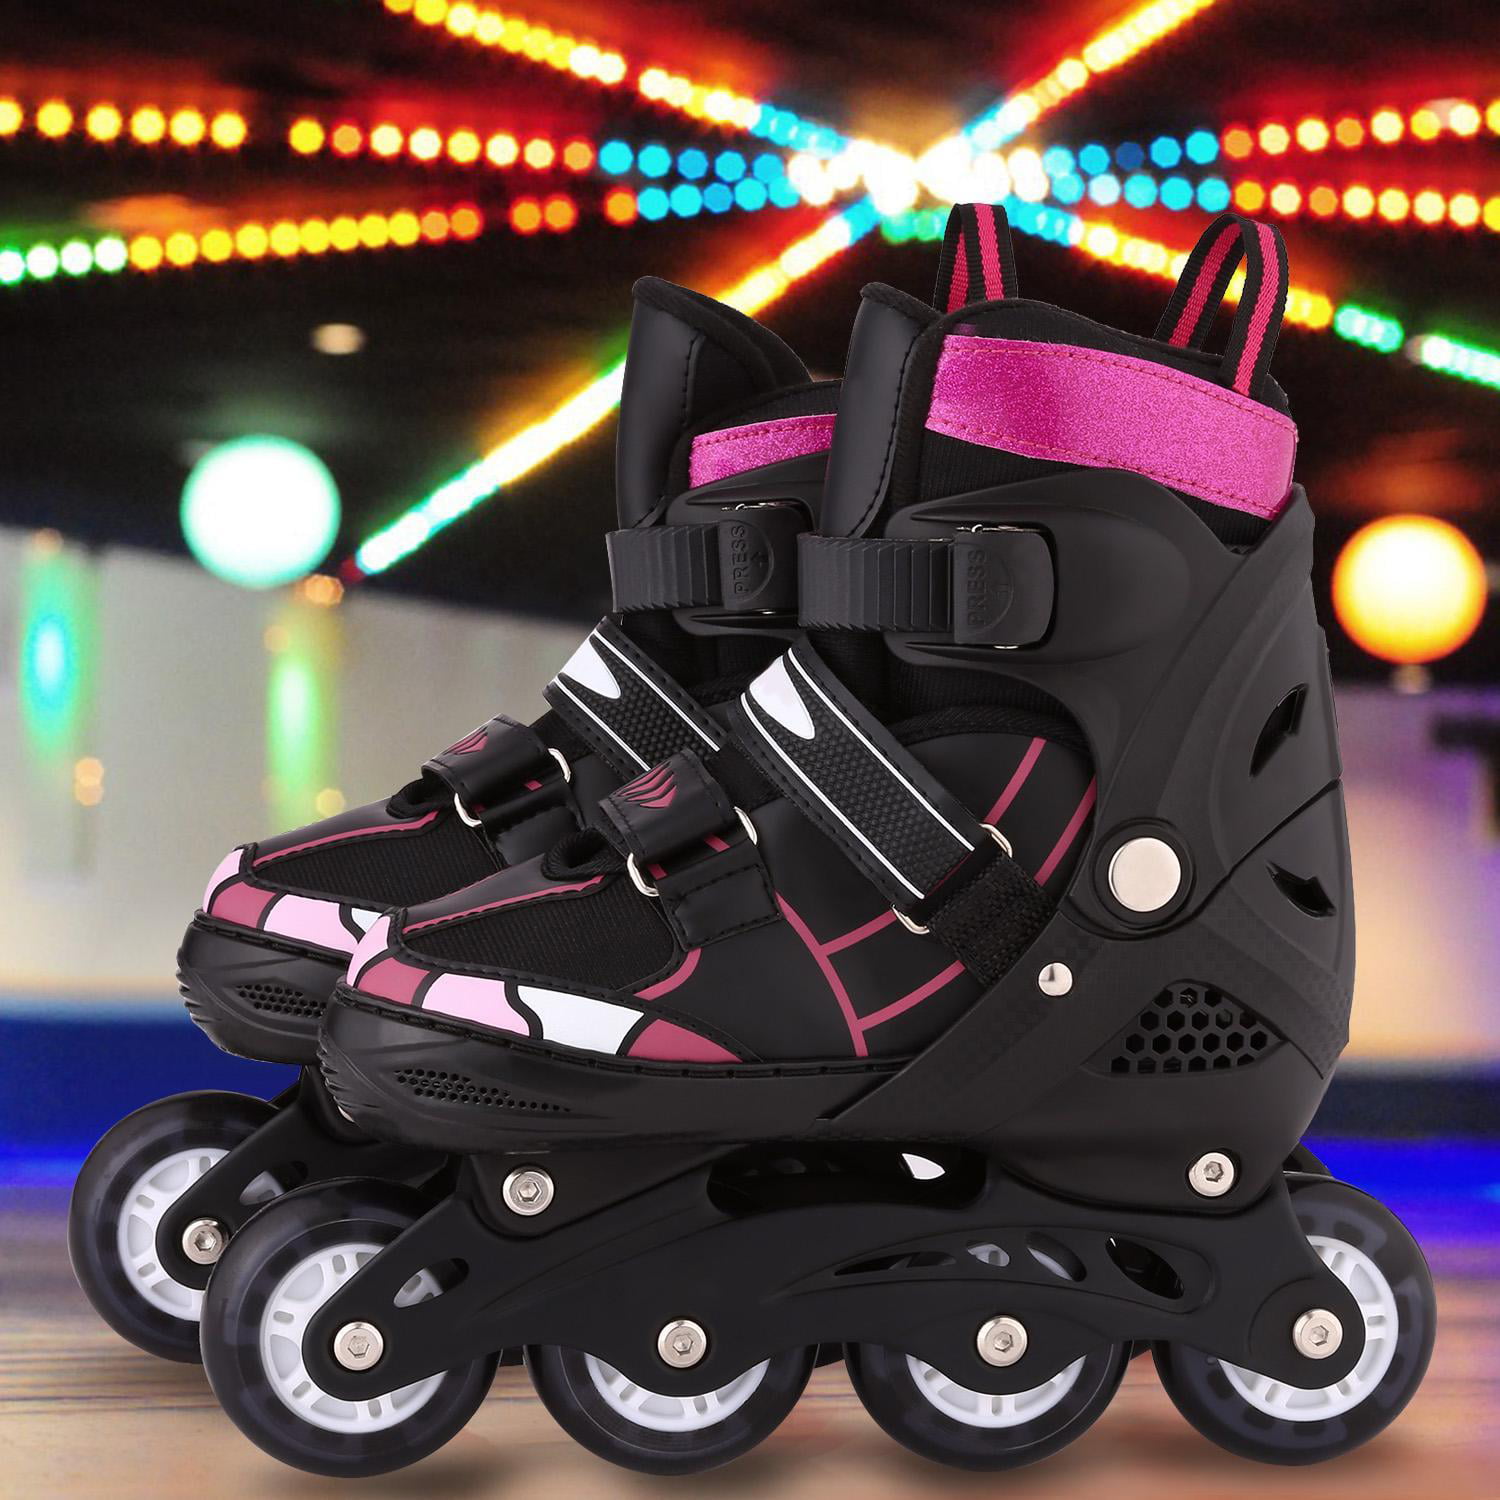 26-41 Adjustable Shoe Size Primlisa Inline Skates for Kids Roller Blades Skates with Light Up Wheels ABEC-7 Chrome Ball Bearings Unisex Fitness Skates for Adults Beginners Girls Boys